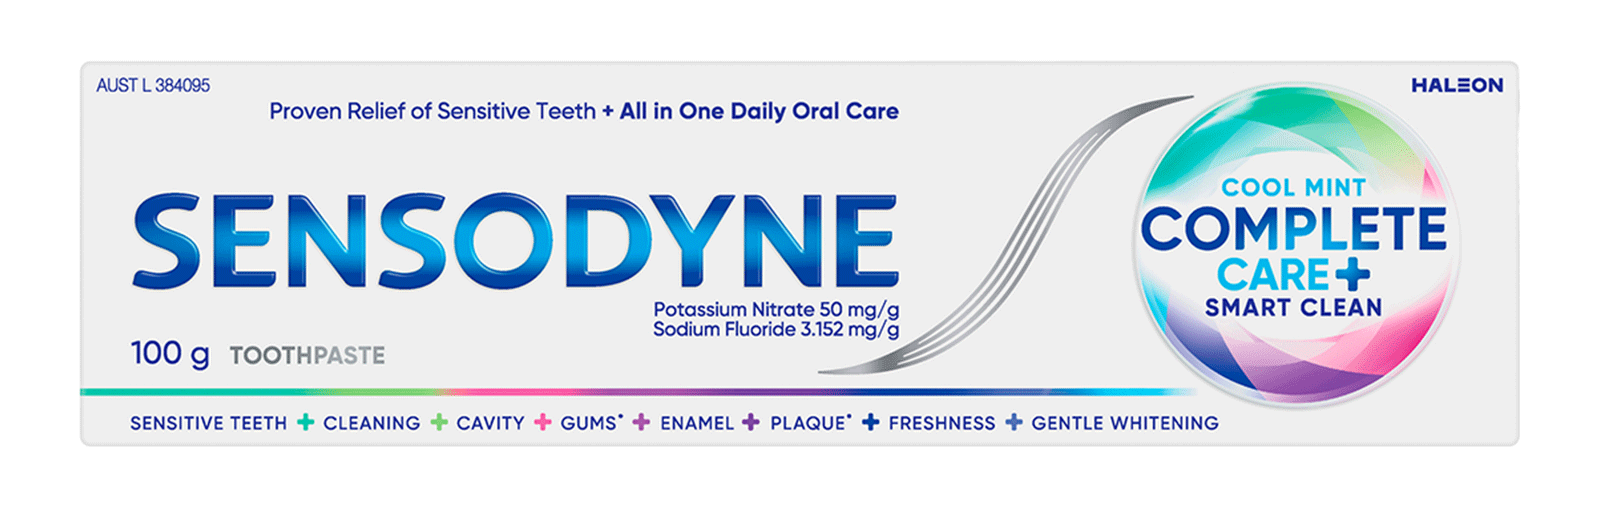 Sensodyne Cool Mint Complete Care + Smart Clean